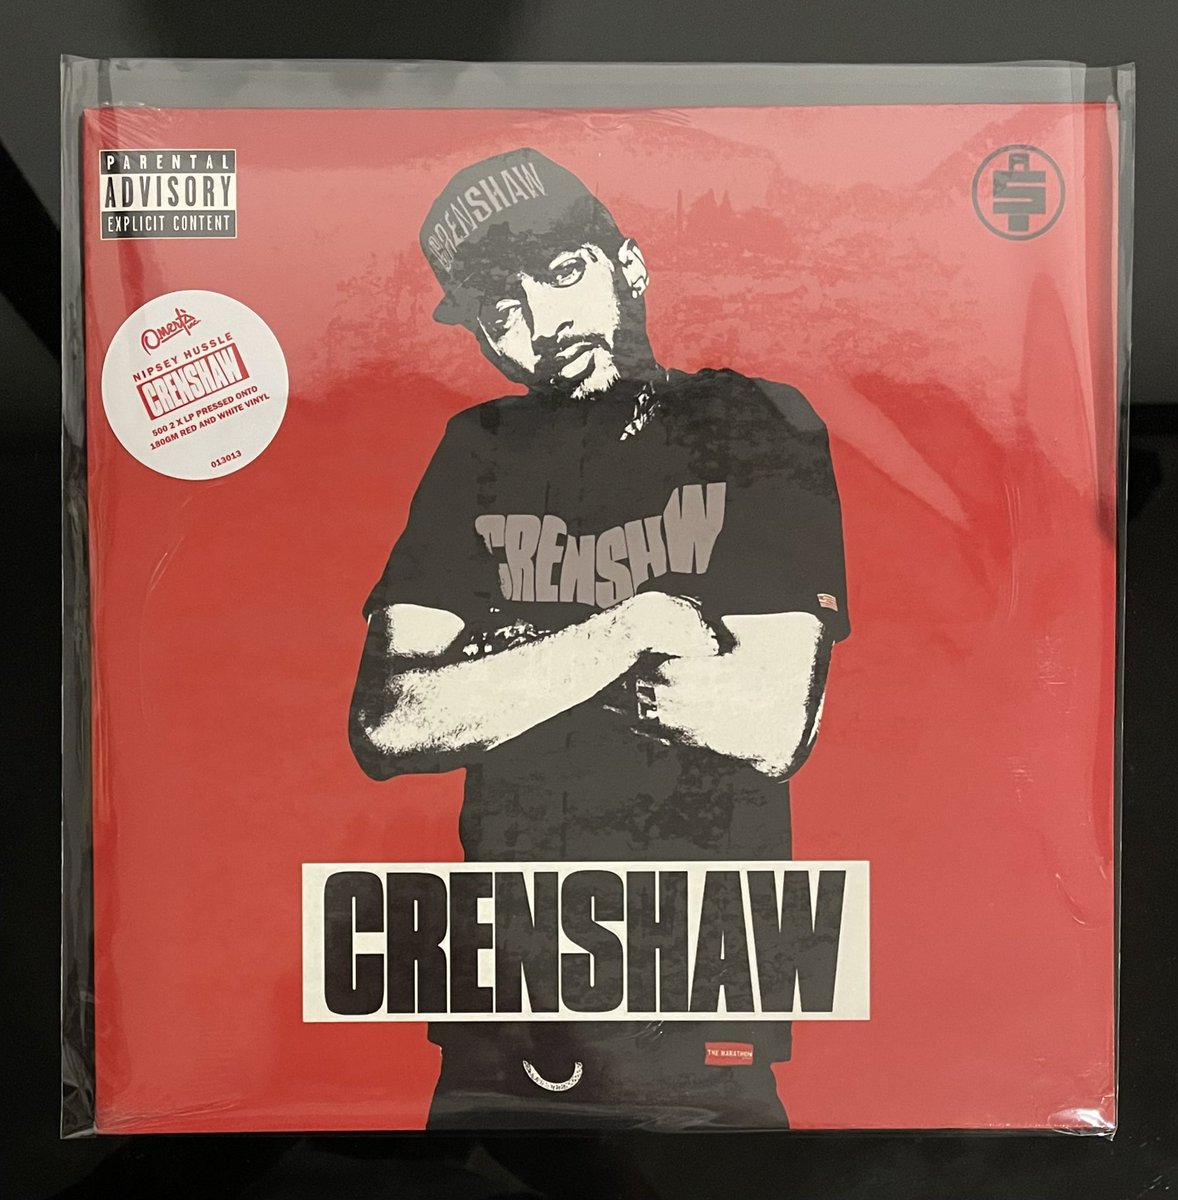 Nipsey Hussle (R.I.P)
“Crenshaw”
2013
Released 8 years ago today 
#ripnipseyhussle #Crenshaw